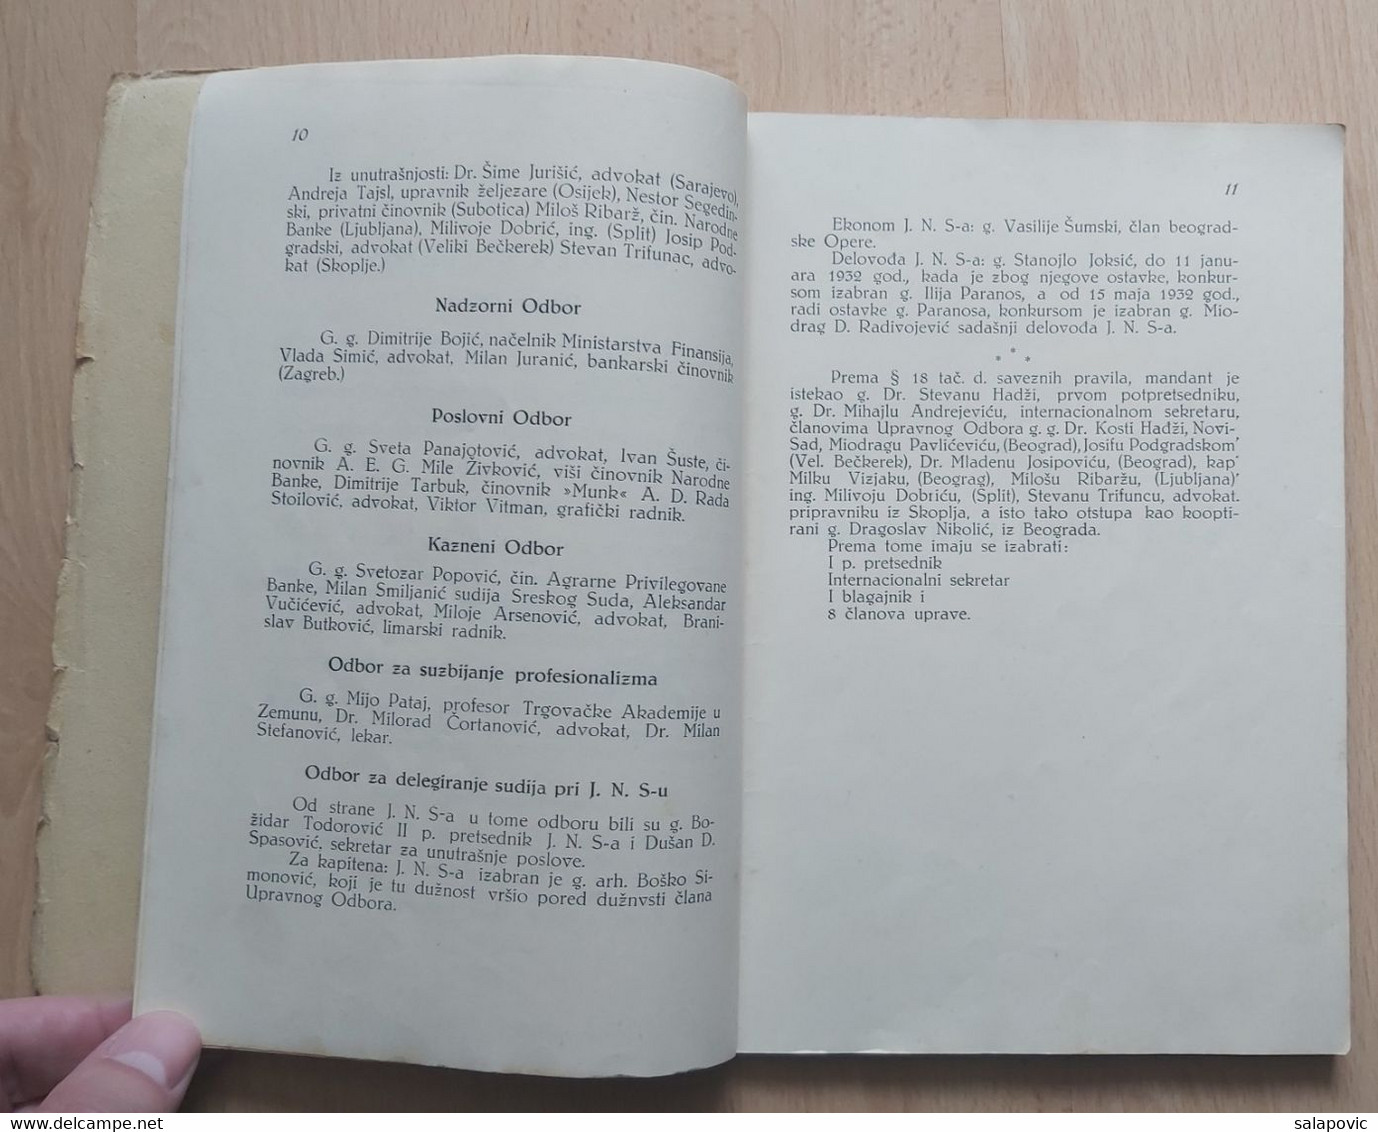 IZVJEŠTAJ O RADU JUGOSLAVENSKOG NOGOMETNOG SAVEZA 1932, YUGOSLAV FOOTBALL FEDERATION - Boeken